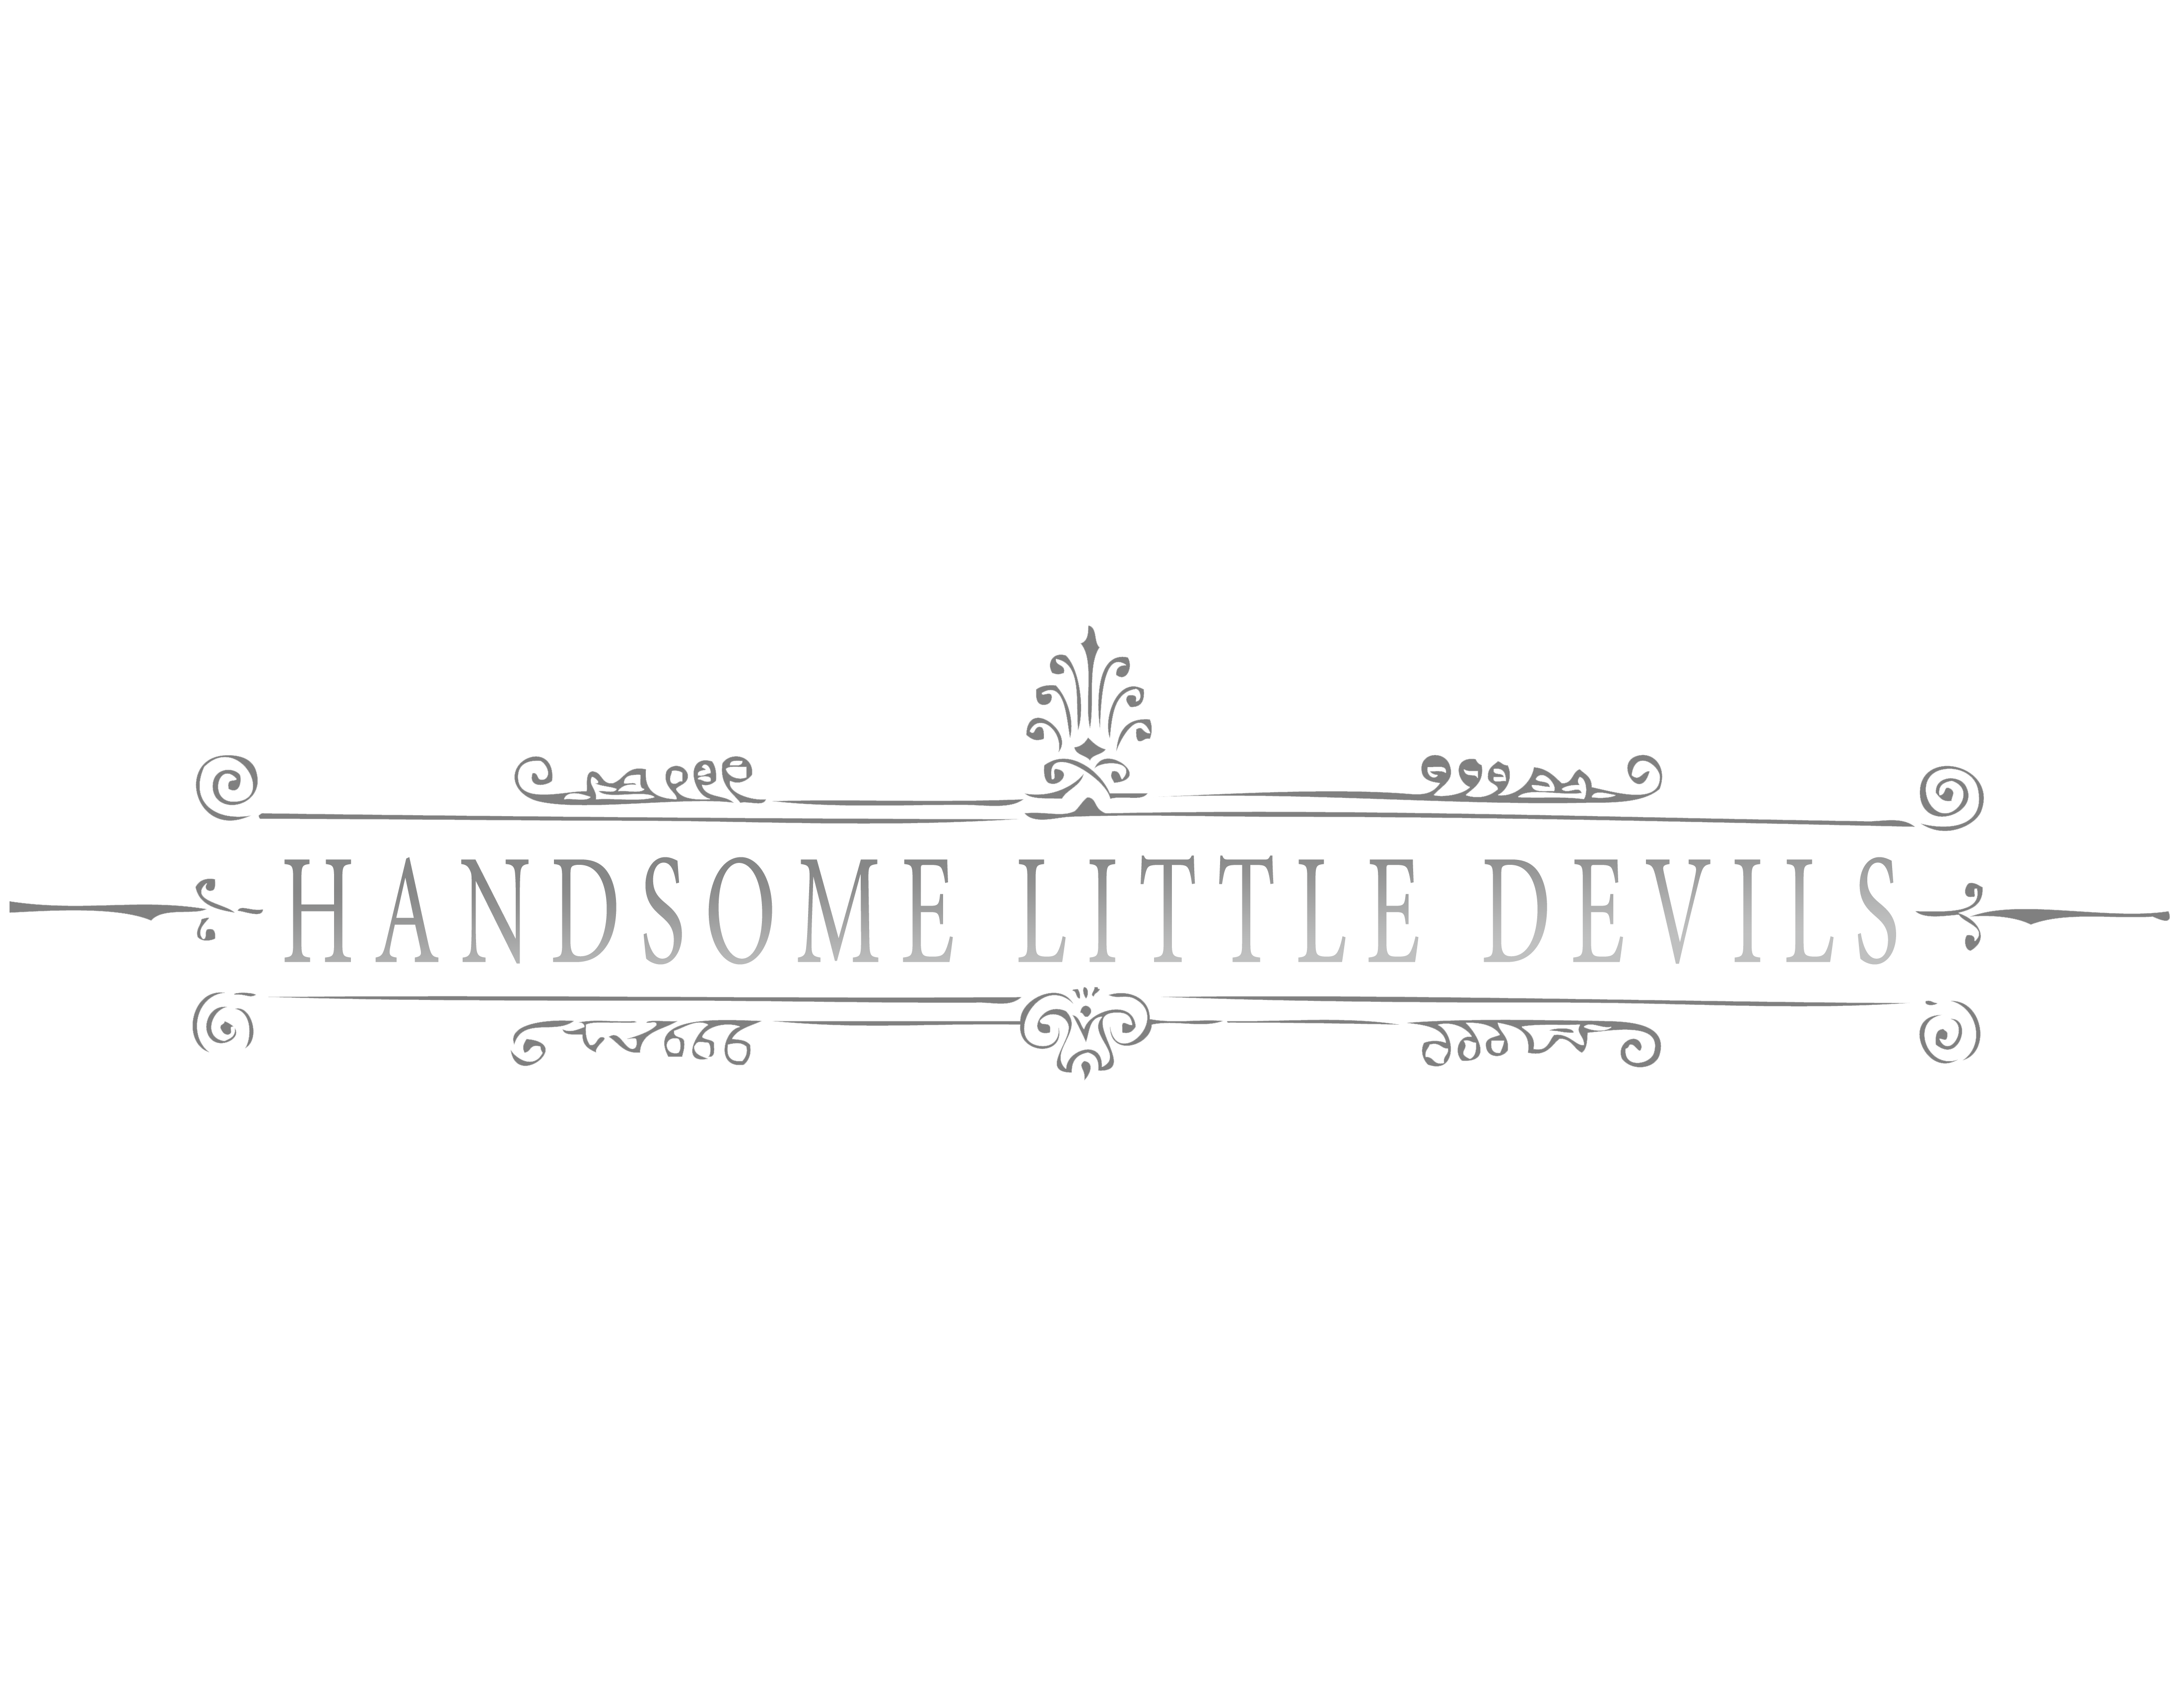 The Handsome Little Devils